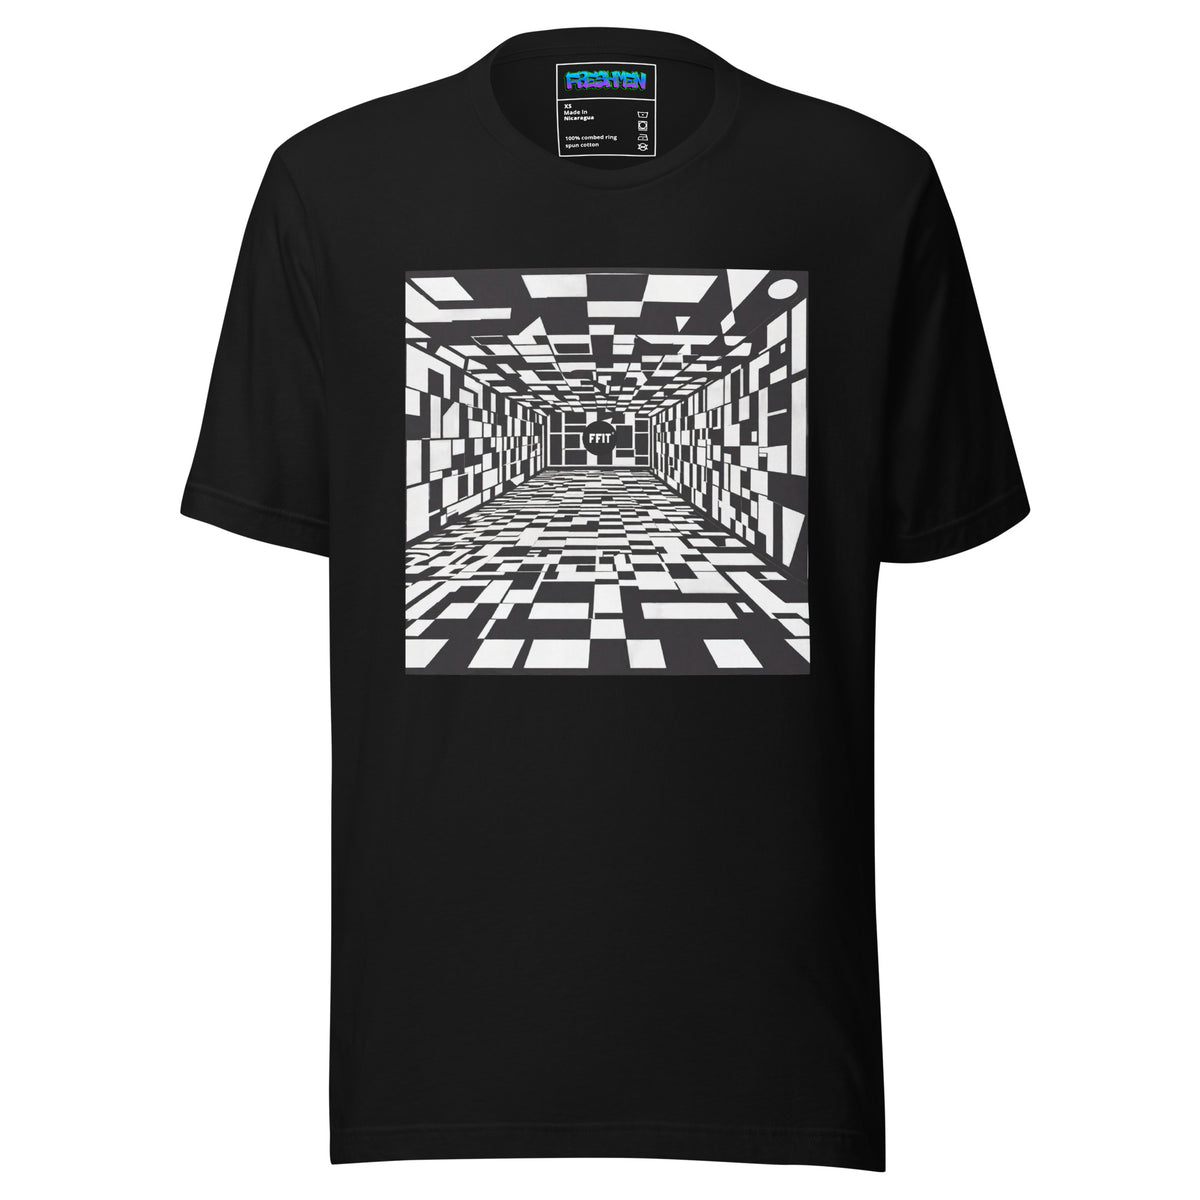 Freshmen FFIT BW Art Unisex Graphic T-Shirt